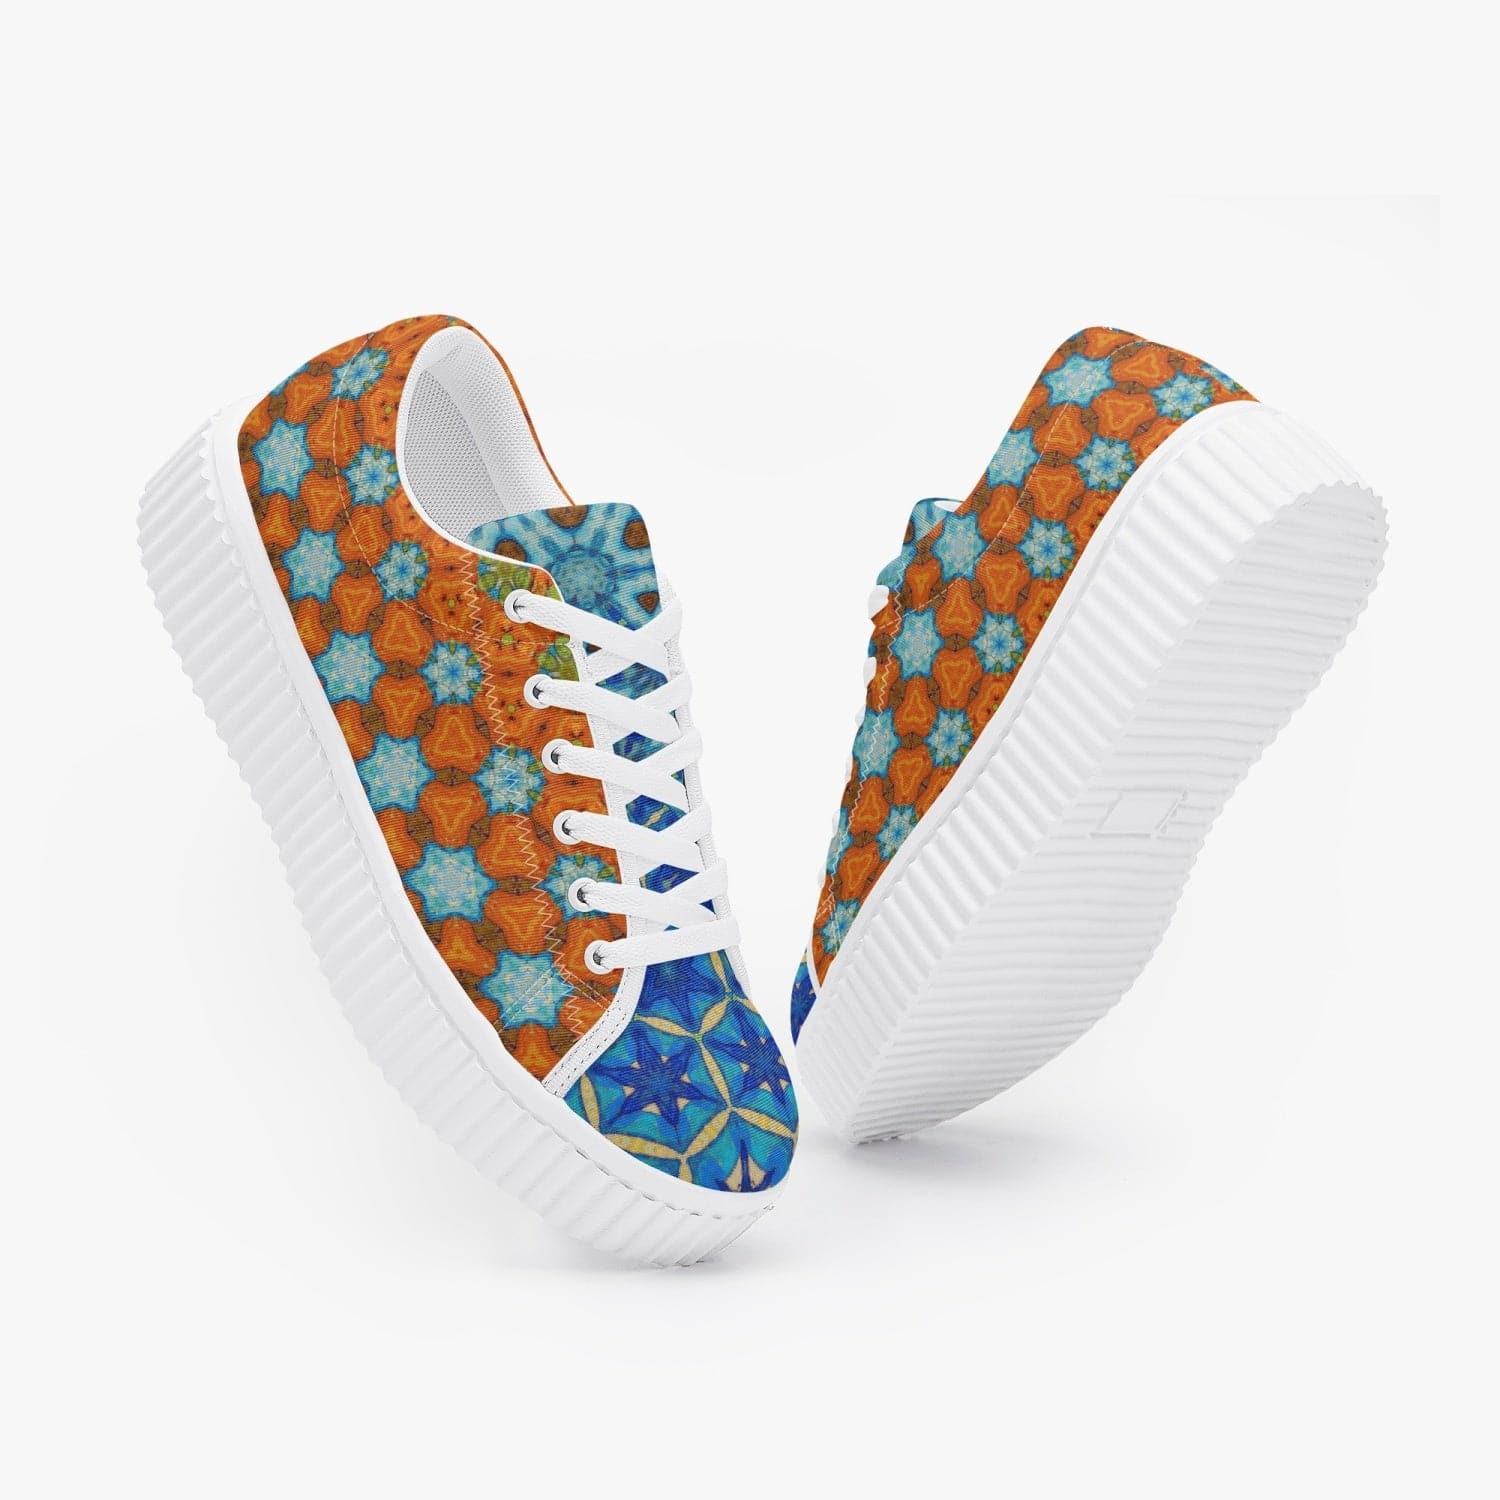 Orange and Blue Joy! Spring 2022 Trendy Women’s Low Top Platform Sneakers, by Sensus Studio Design